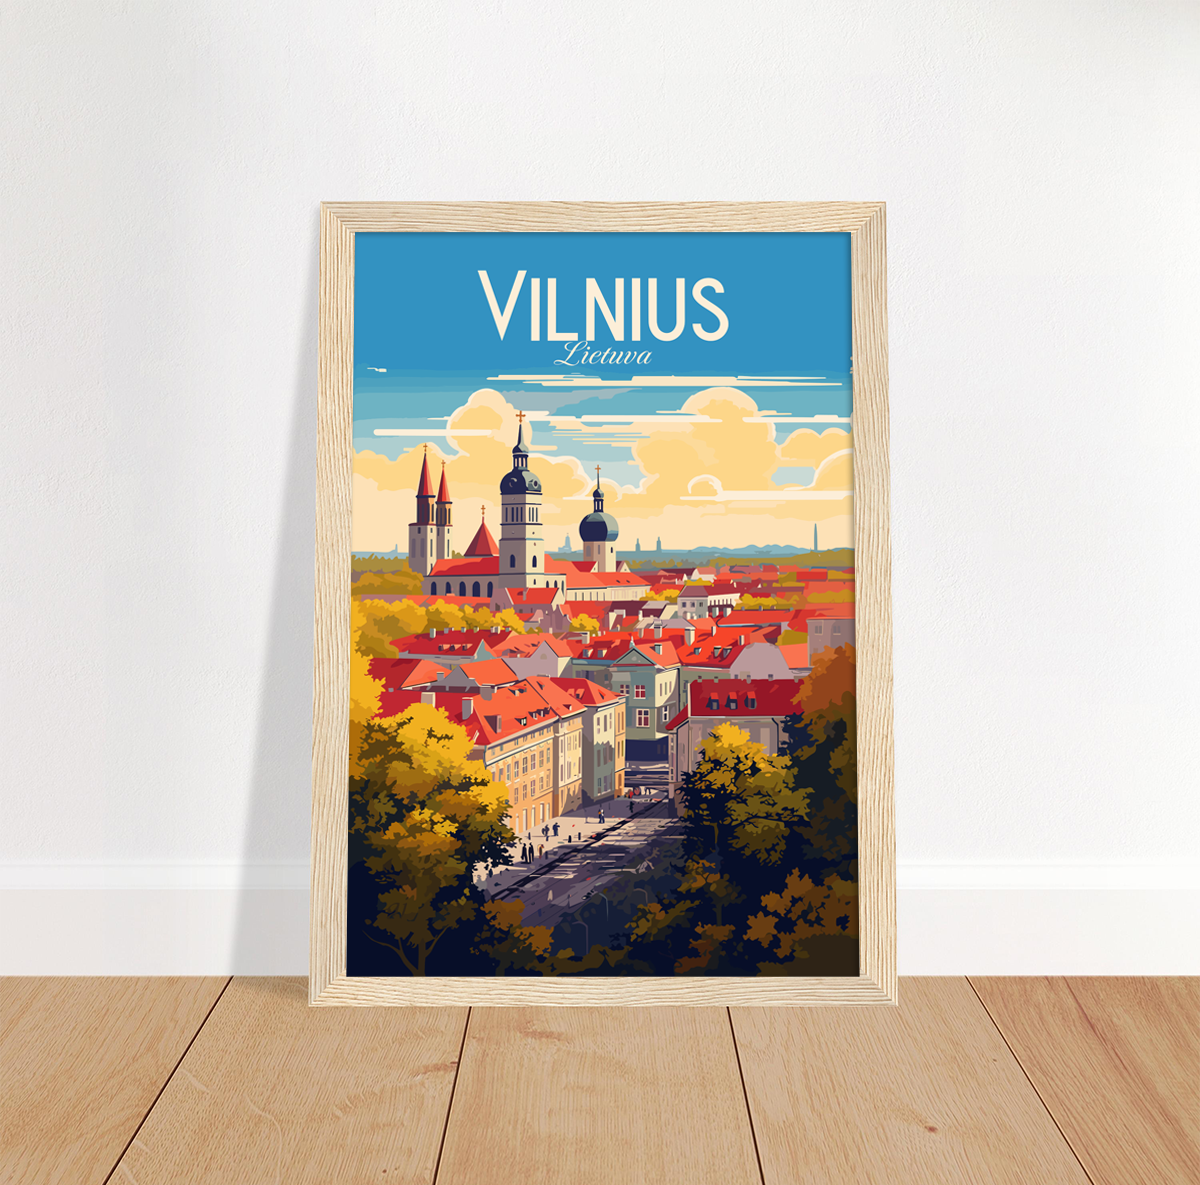 Vilnius poster by bon voyage design